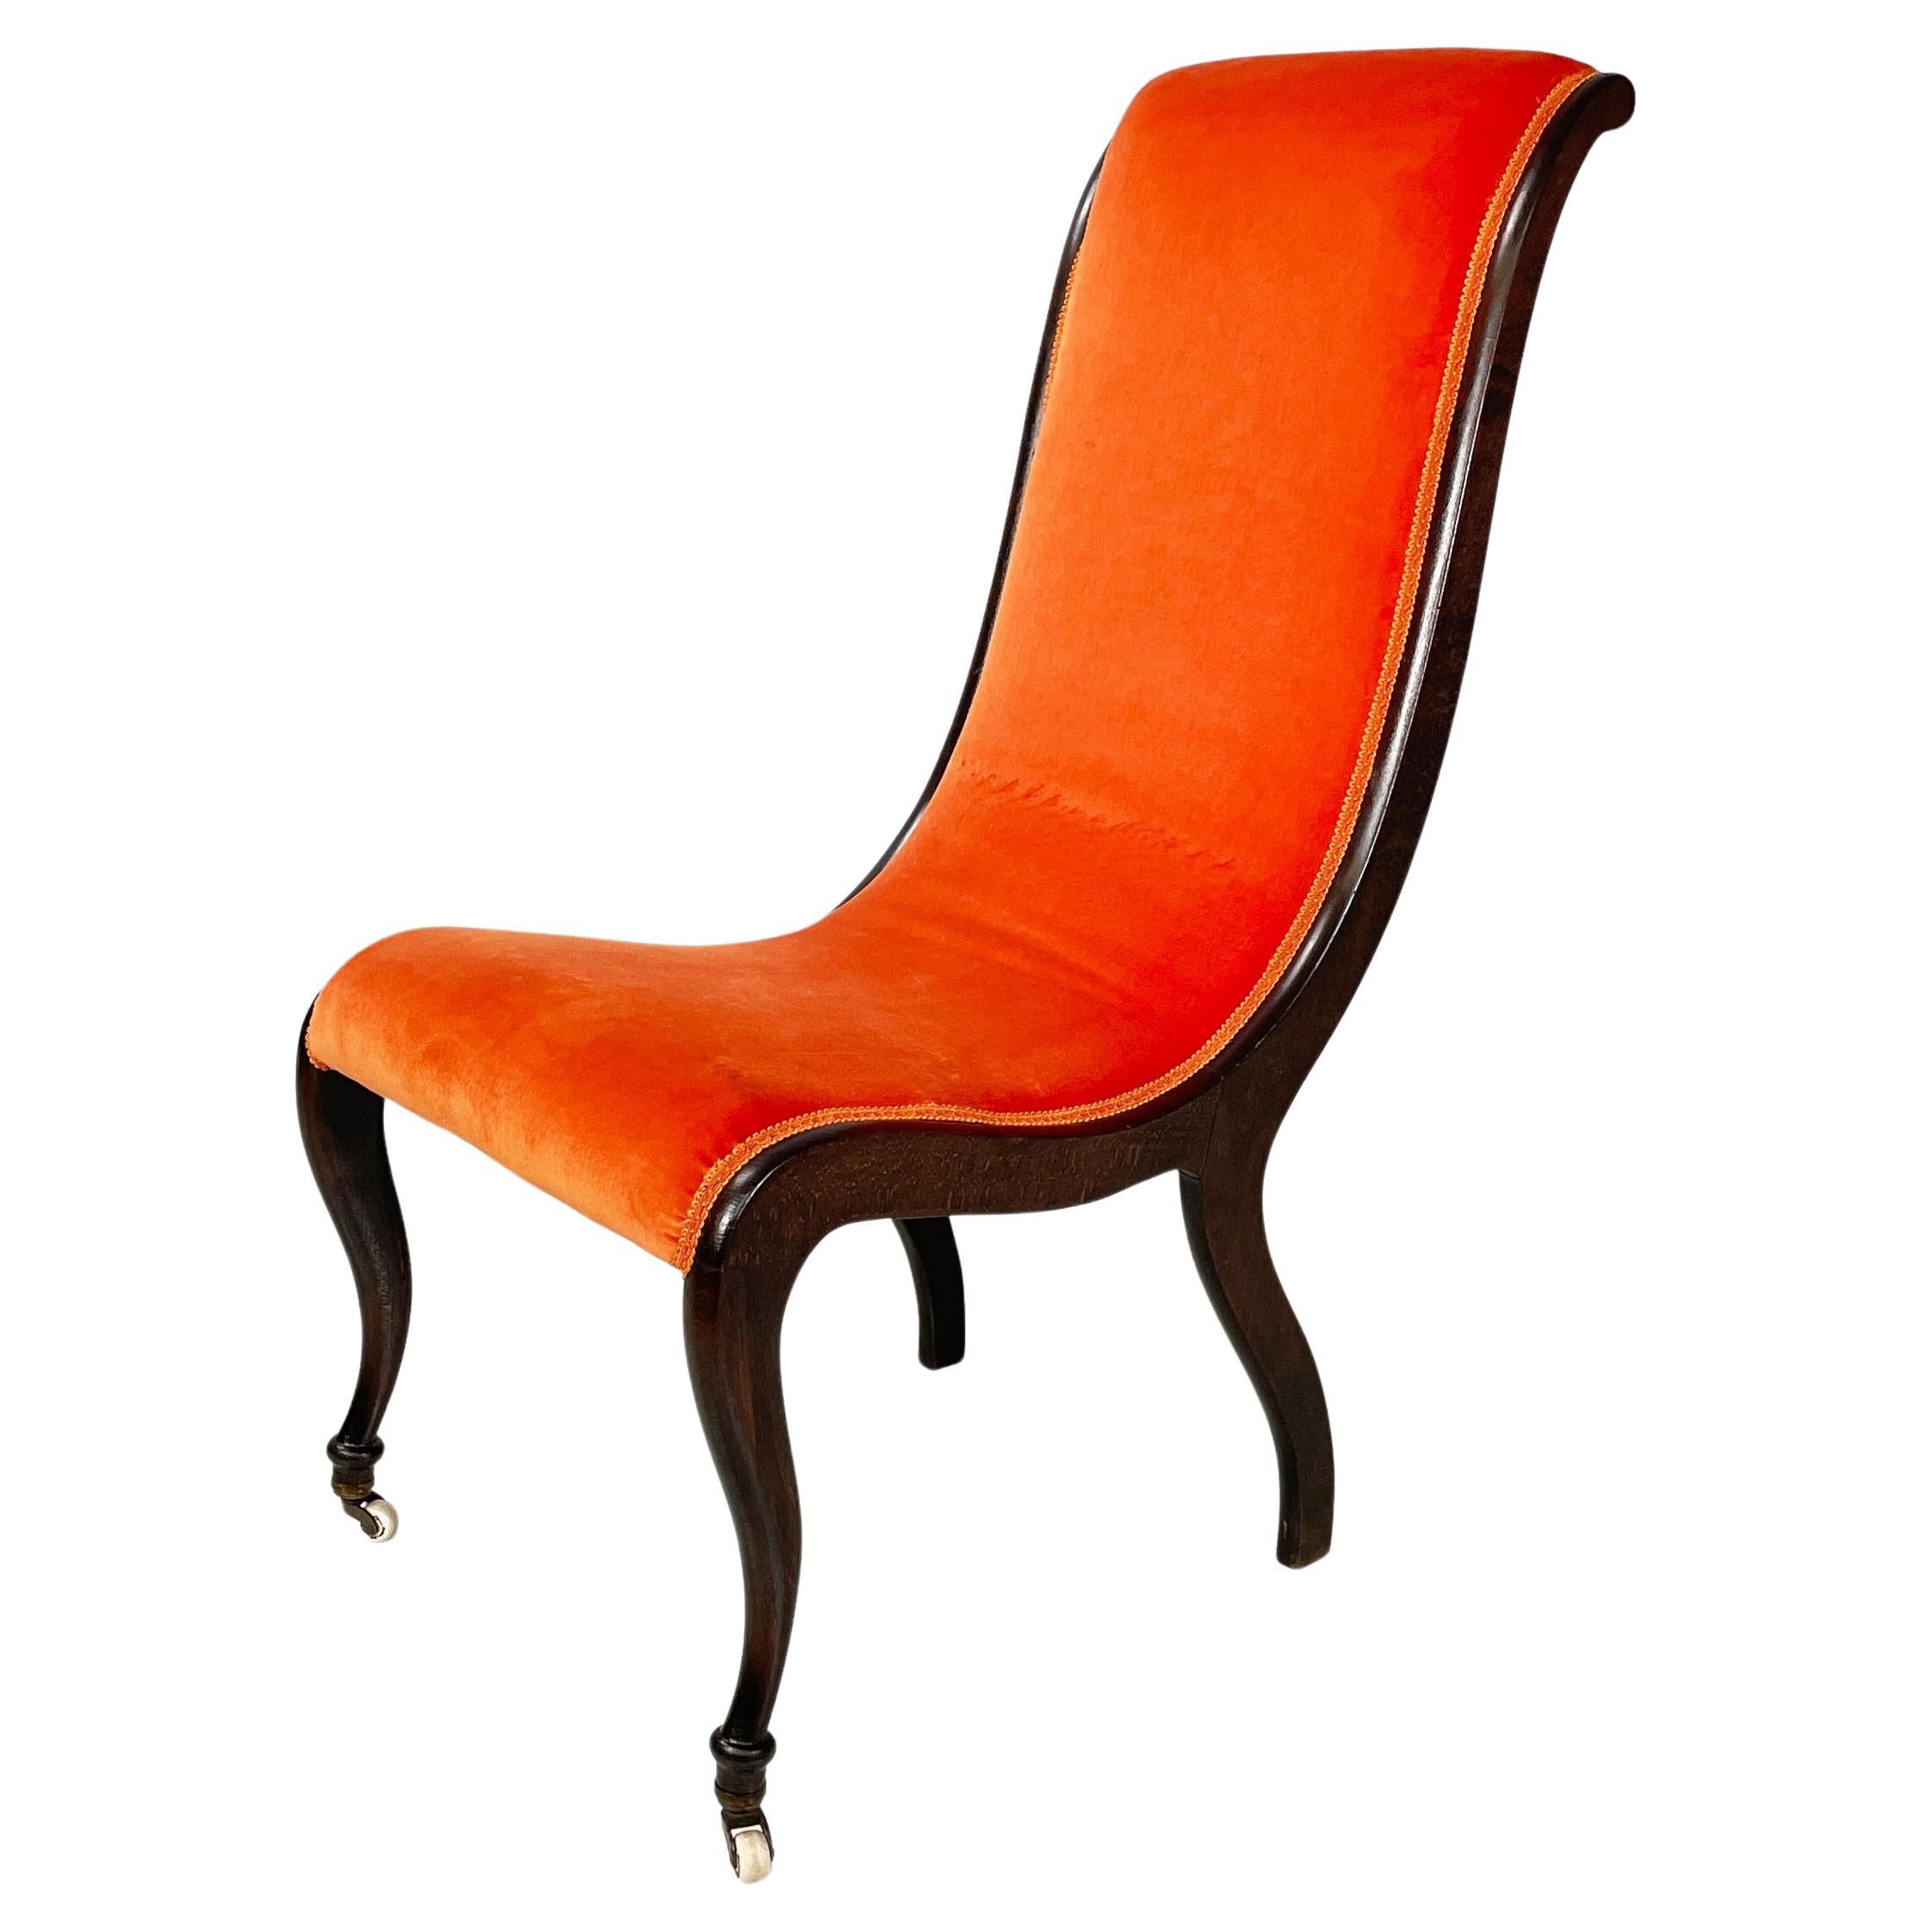 Danish mid-century modern Chair in orange velvet and dark wood, 1950s